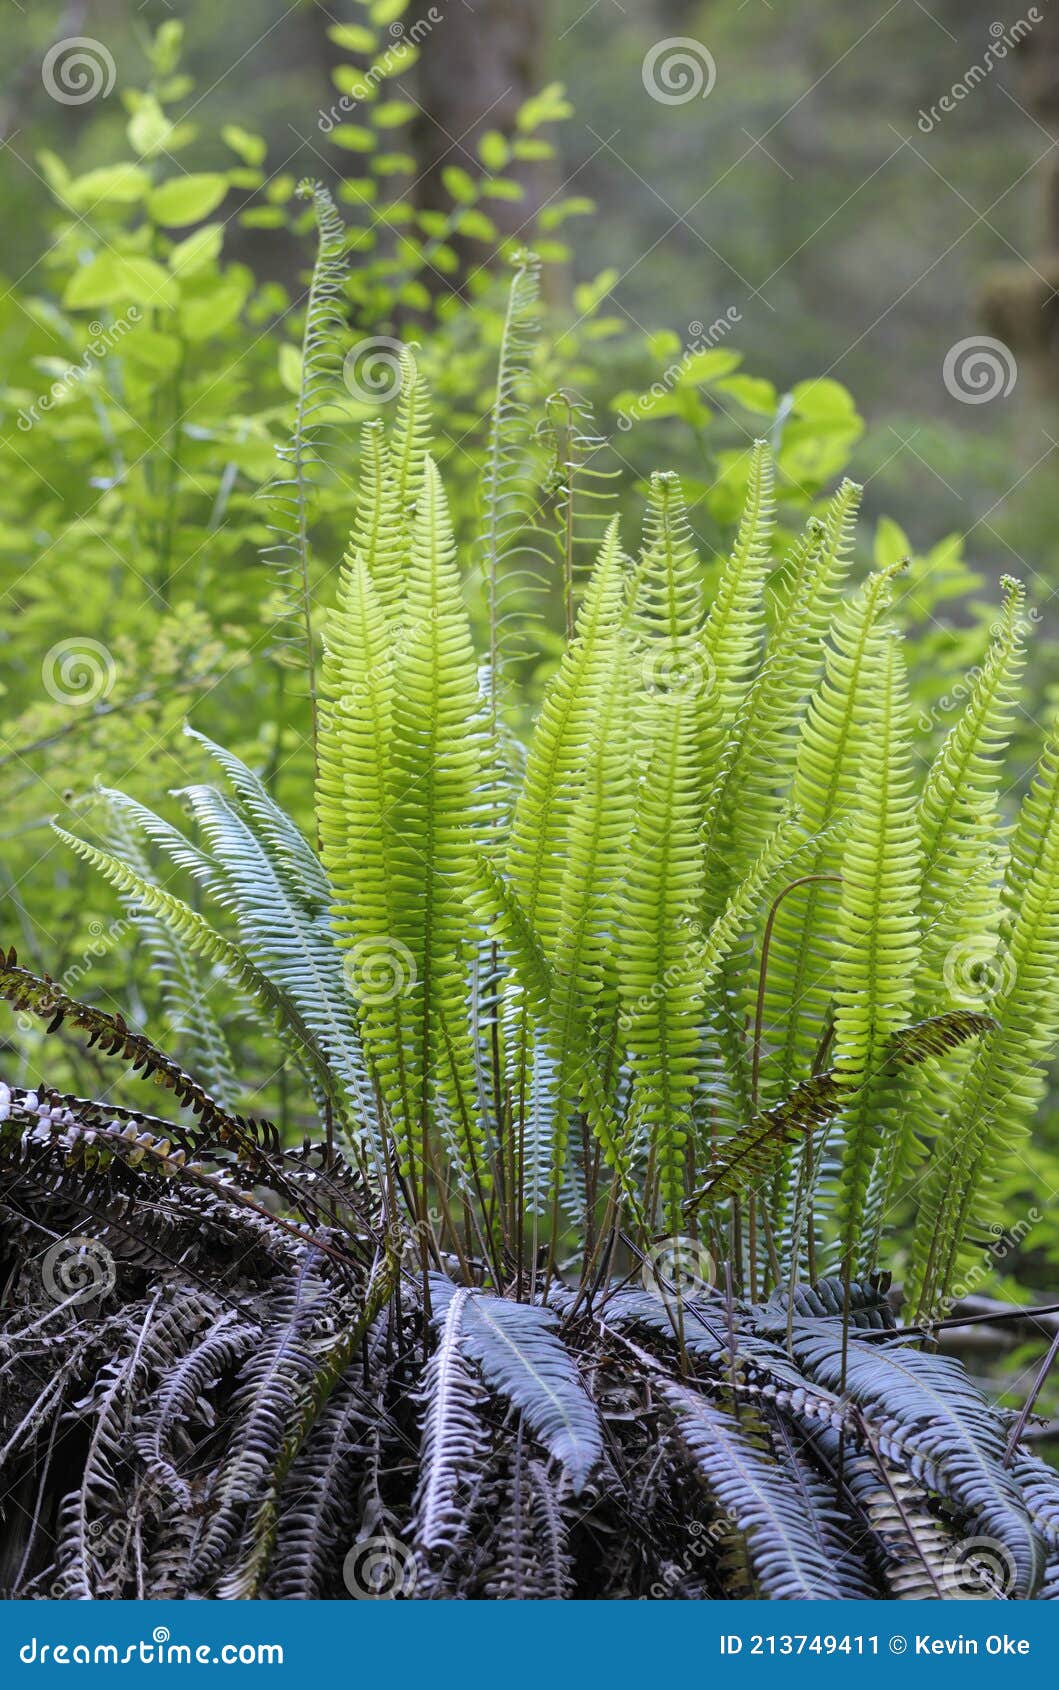 western sword fern polystichum munitum, carmanah walbran provincial park, british columbia